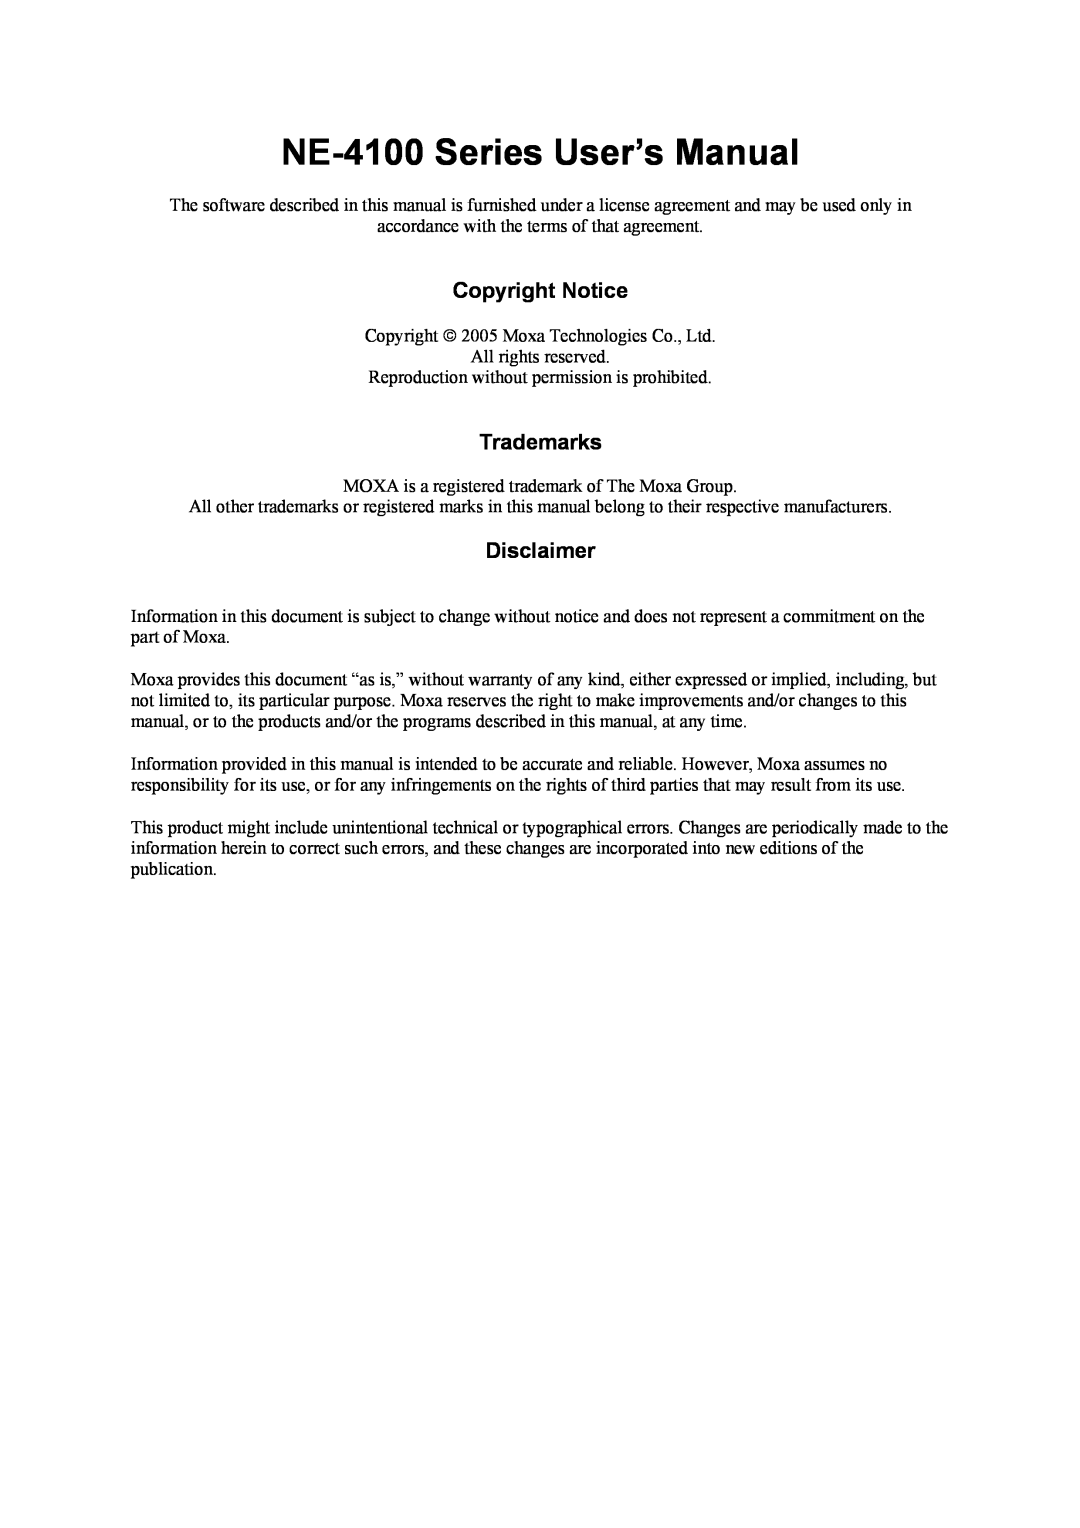 Moxa Technologies user manual Copyright Notice, Trademarks, Disclaimer, NE-4100 Series User’s Manual 